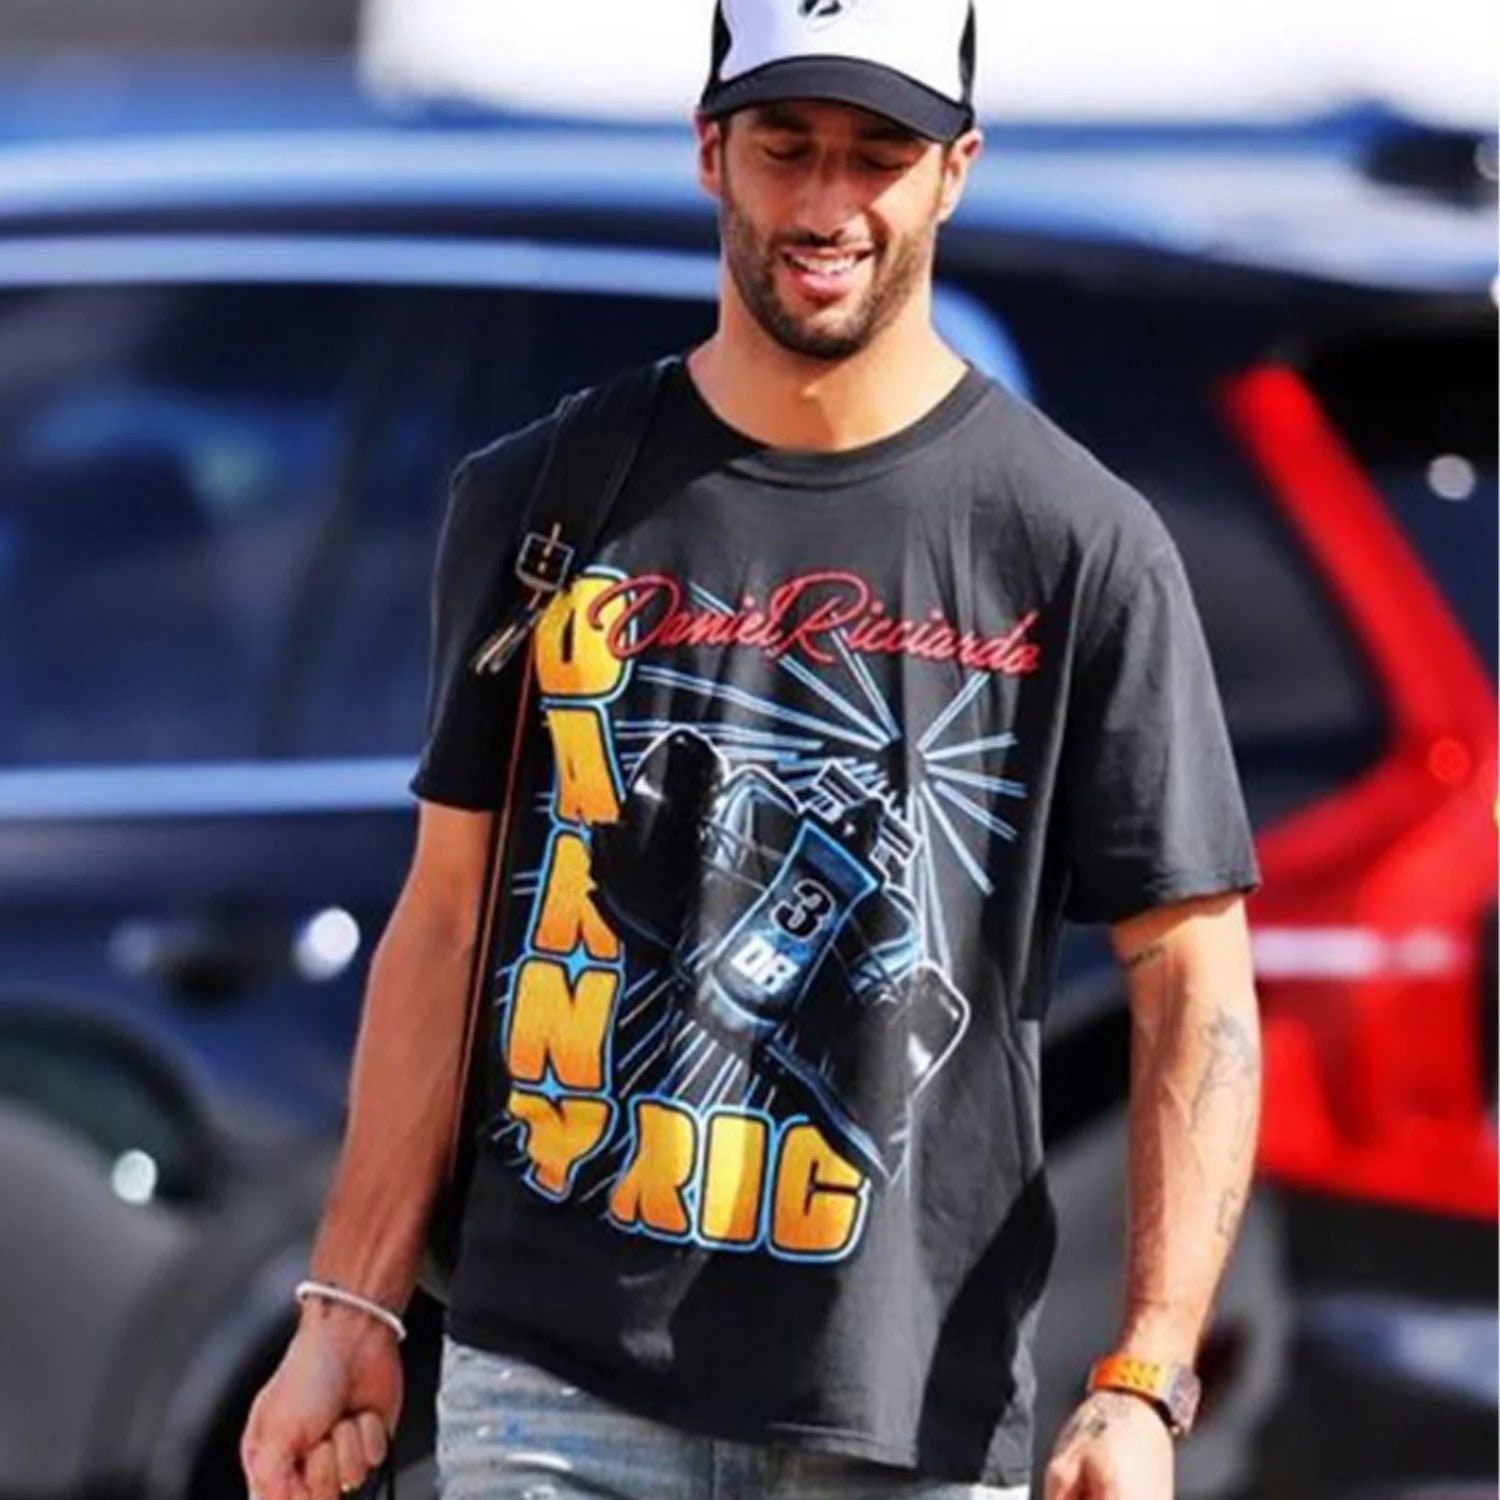 Discover Daniel Ricciardo Speedway TShirt, Daniel Ricciardo Racing 90s T-shirt